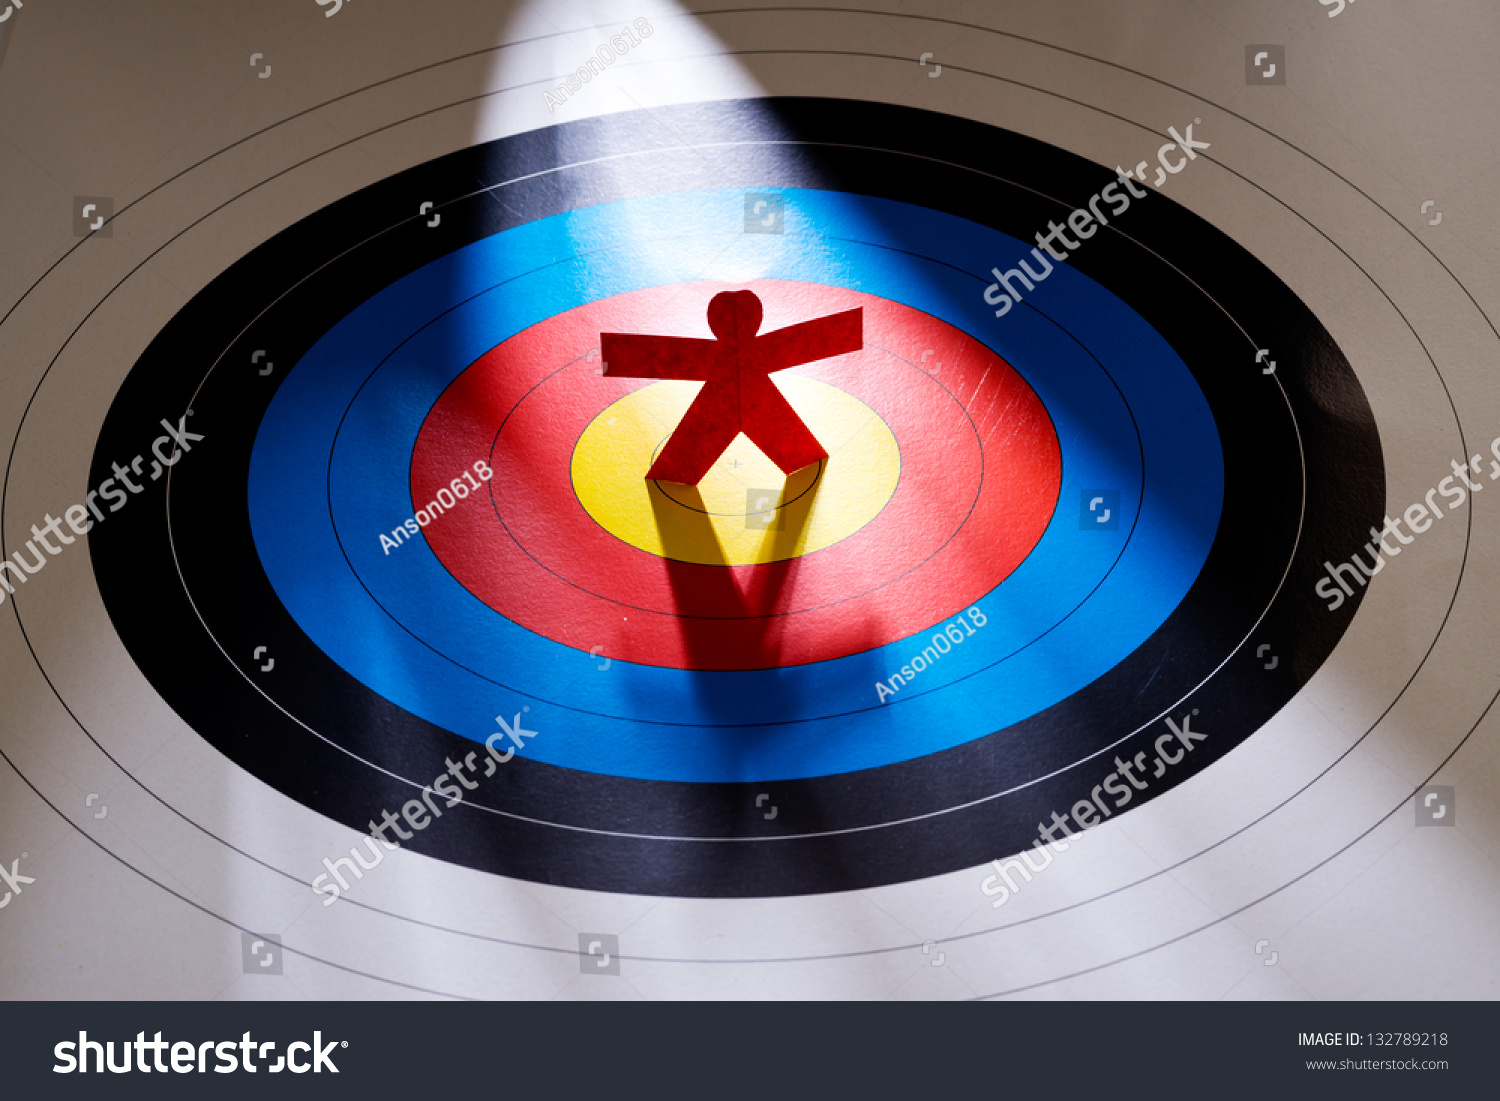 ck one target